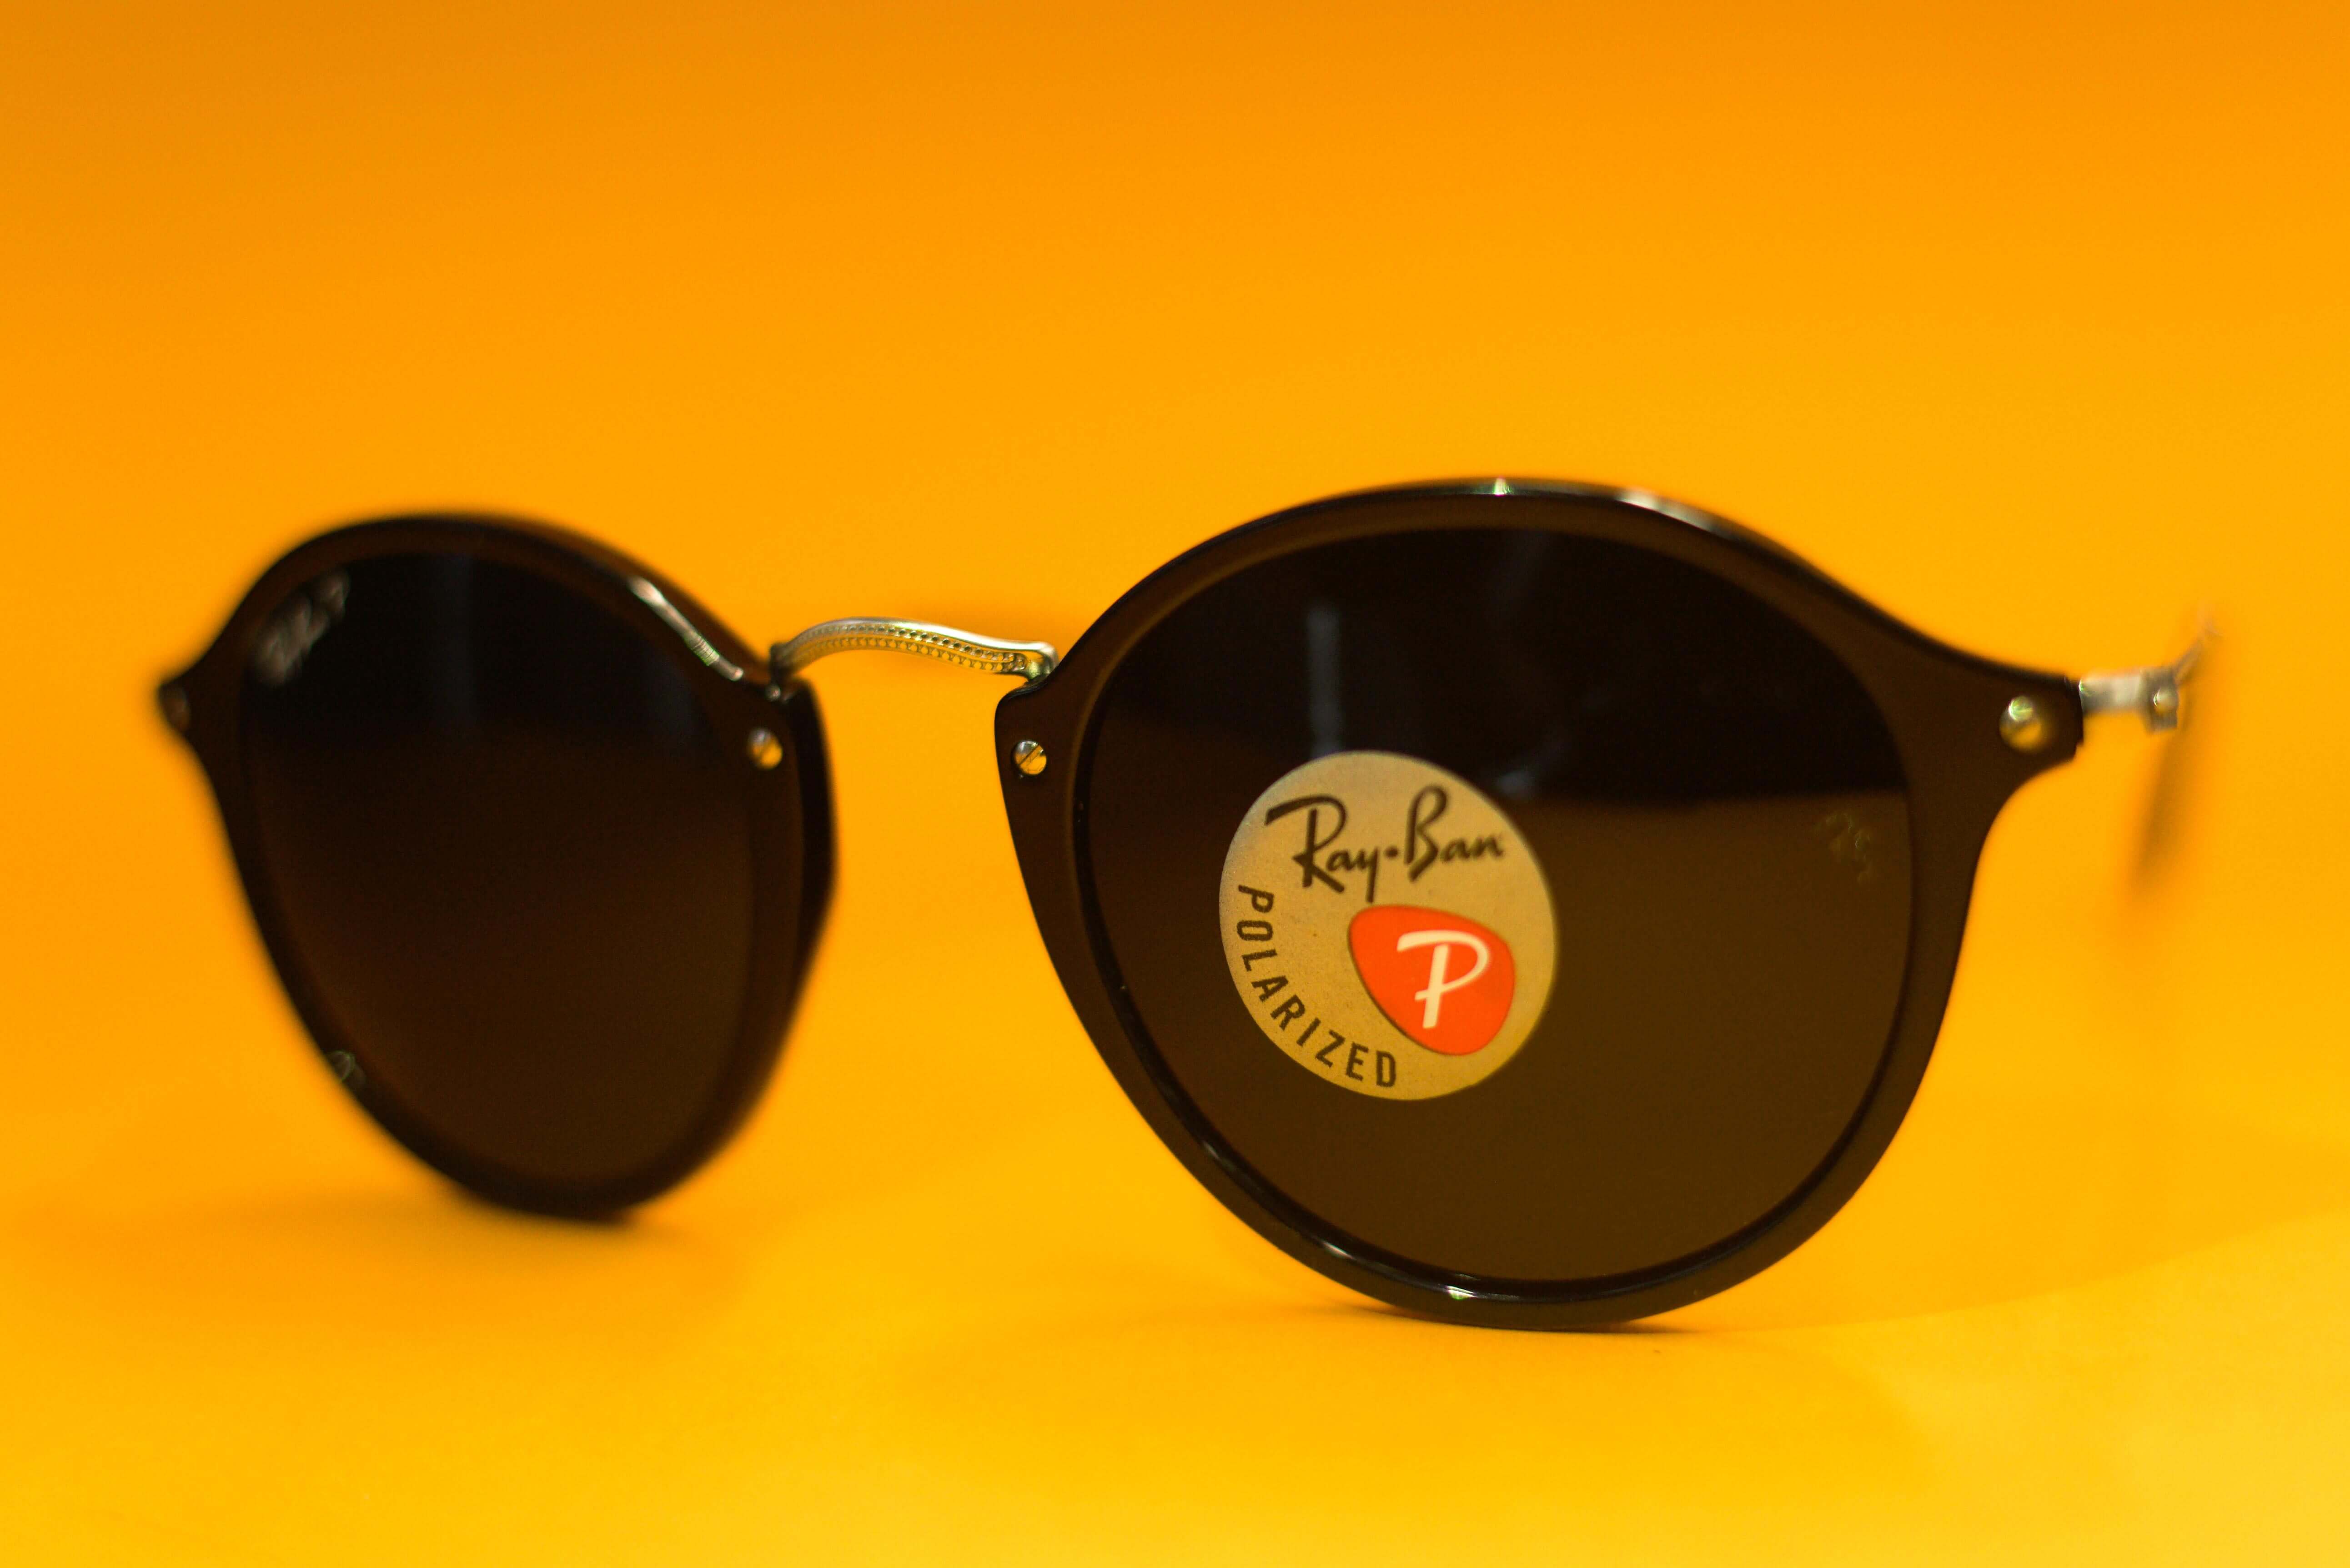 Ray-Ban Logo - Guide to spotting authentic Ray-Ban sunglasses | eyerim blog